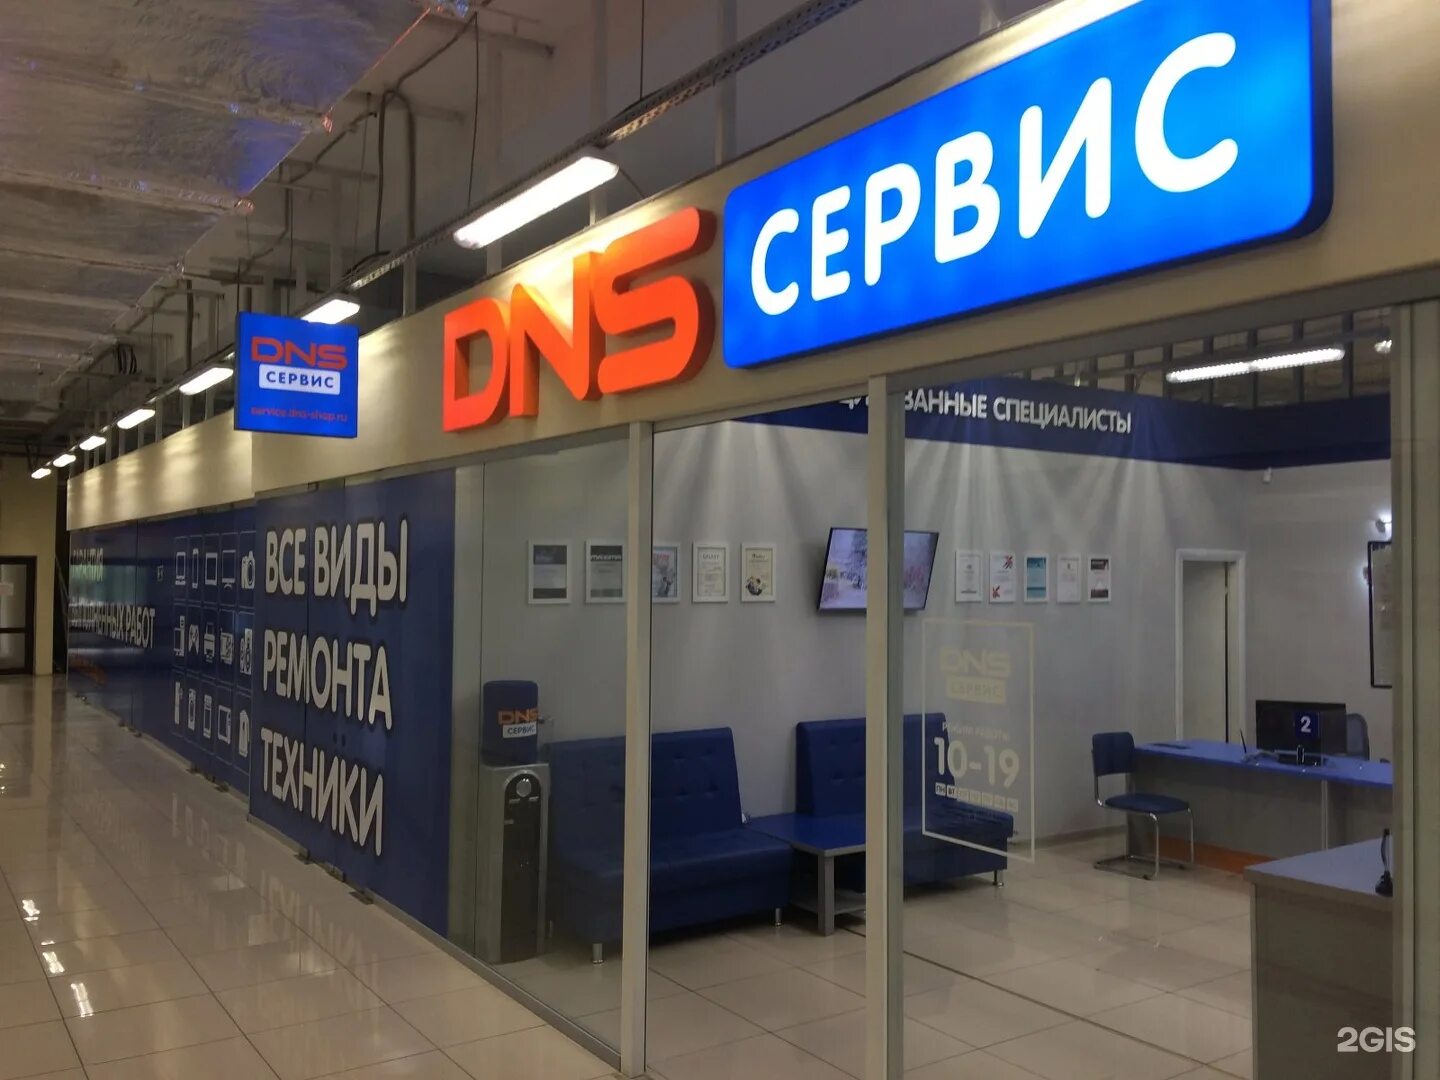 Минаева 11 Ульяновск сервисный центр ДНС. DNS сервис. ДНС ремонтный сервис. Сервис центр DNS.